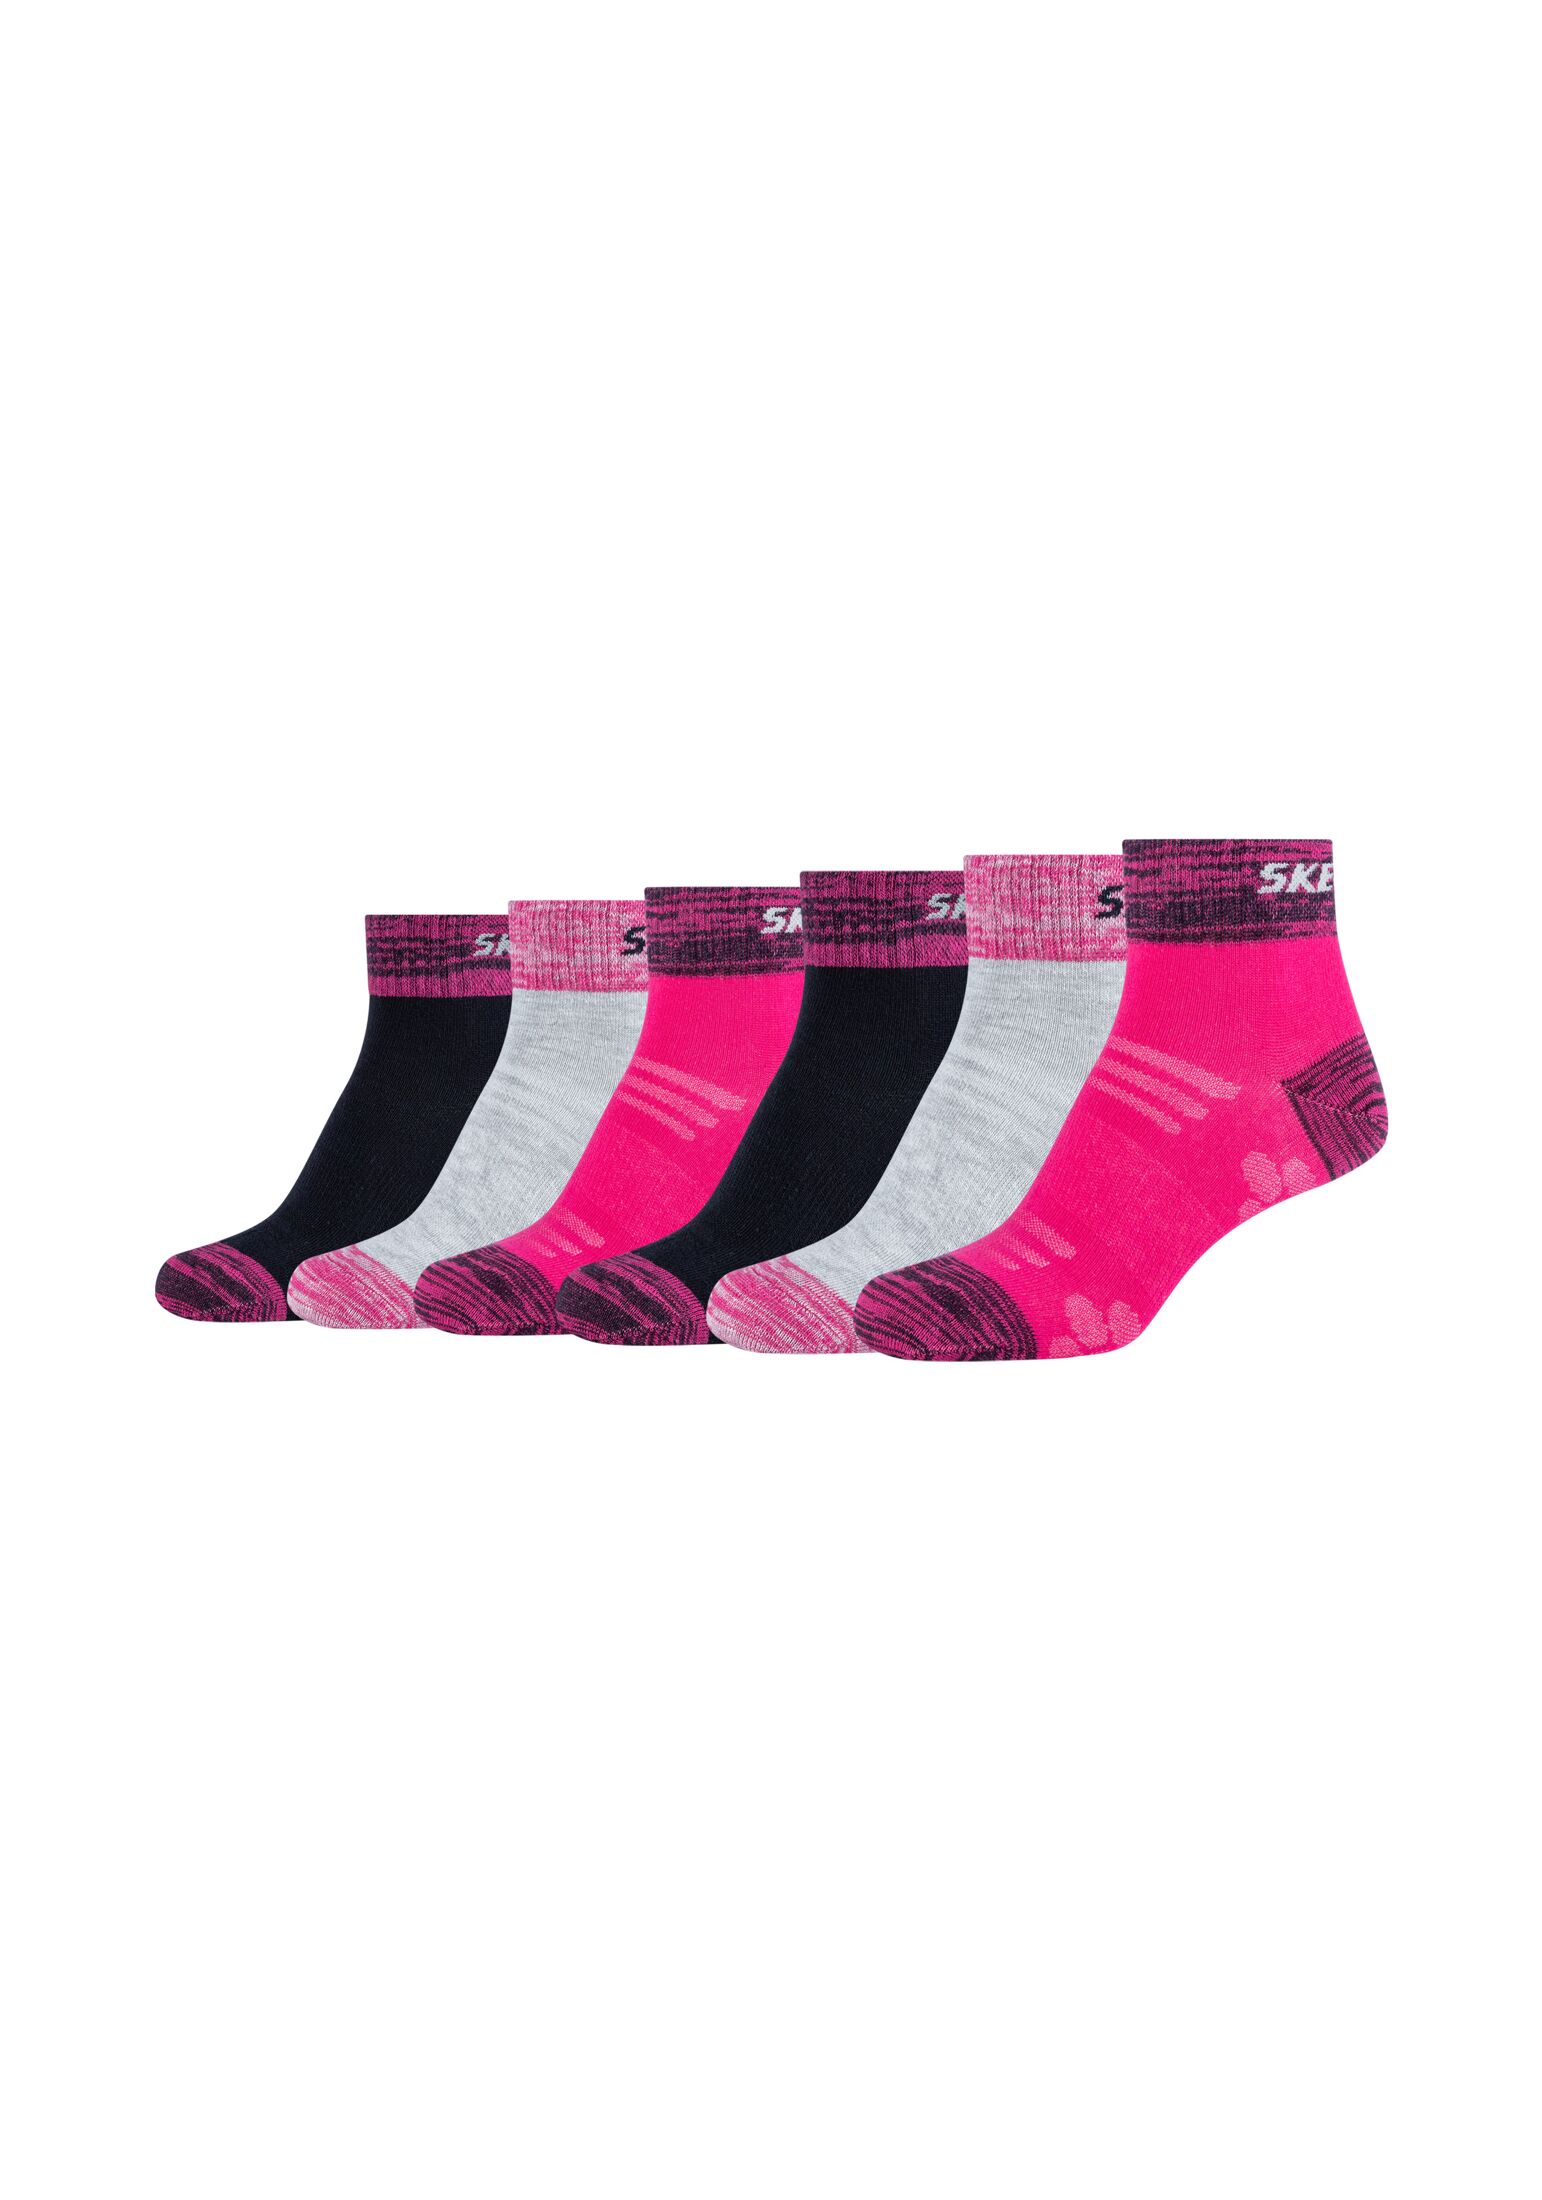 Носки Skechers 6 шт mesh ventilation, цвет pink glow